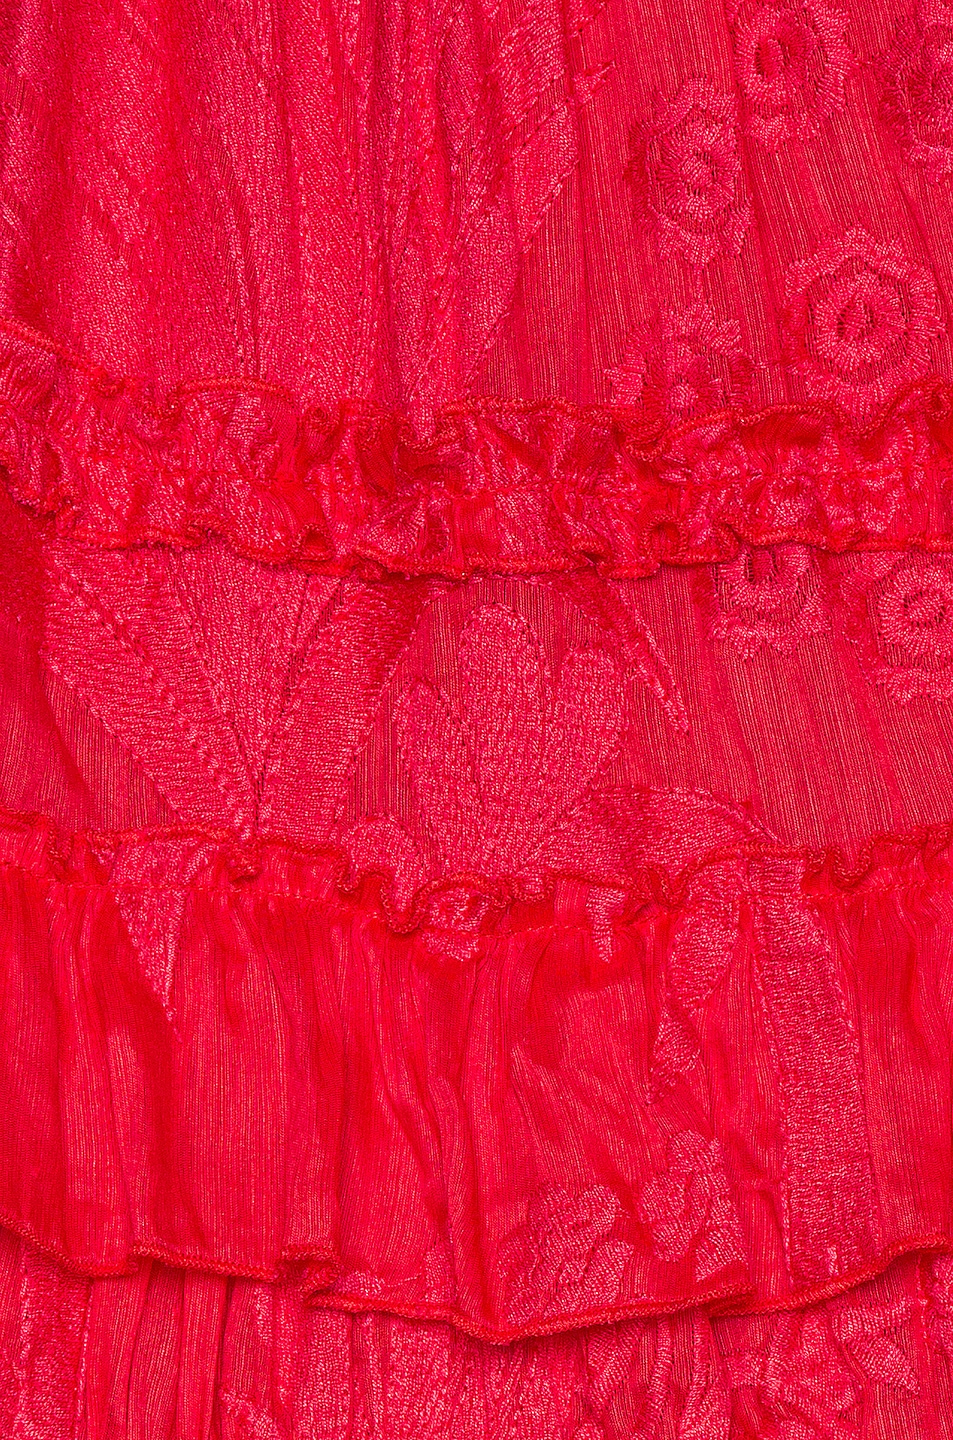 Alexis Allora Gown in Red Azalea | FWRD